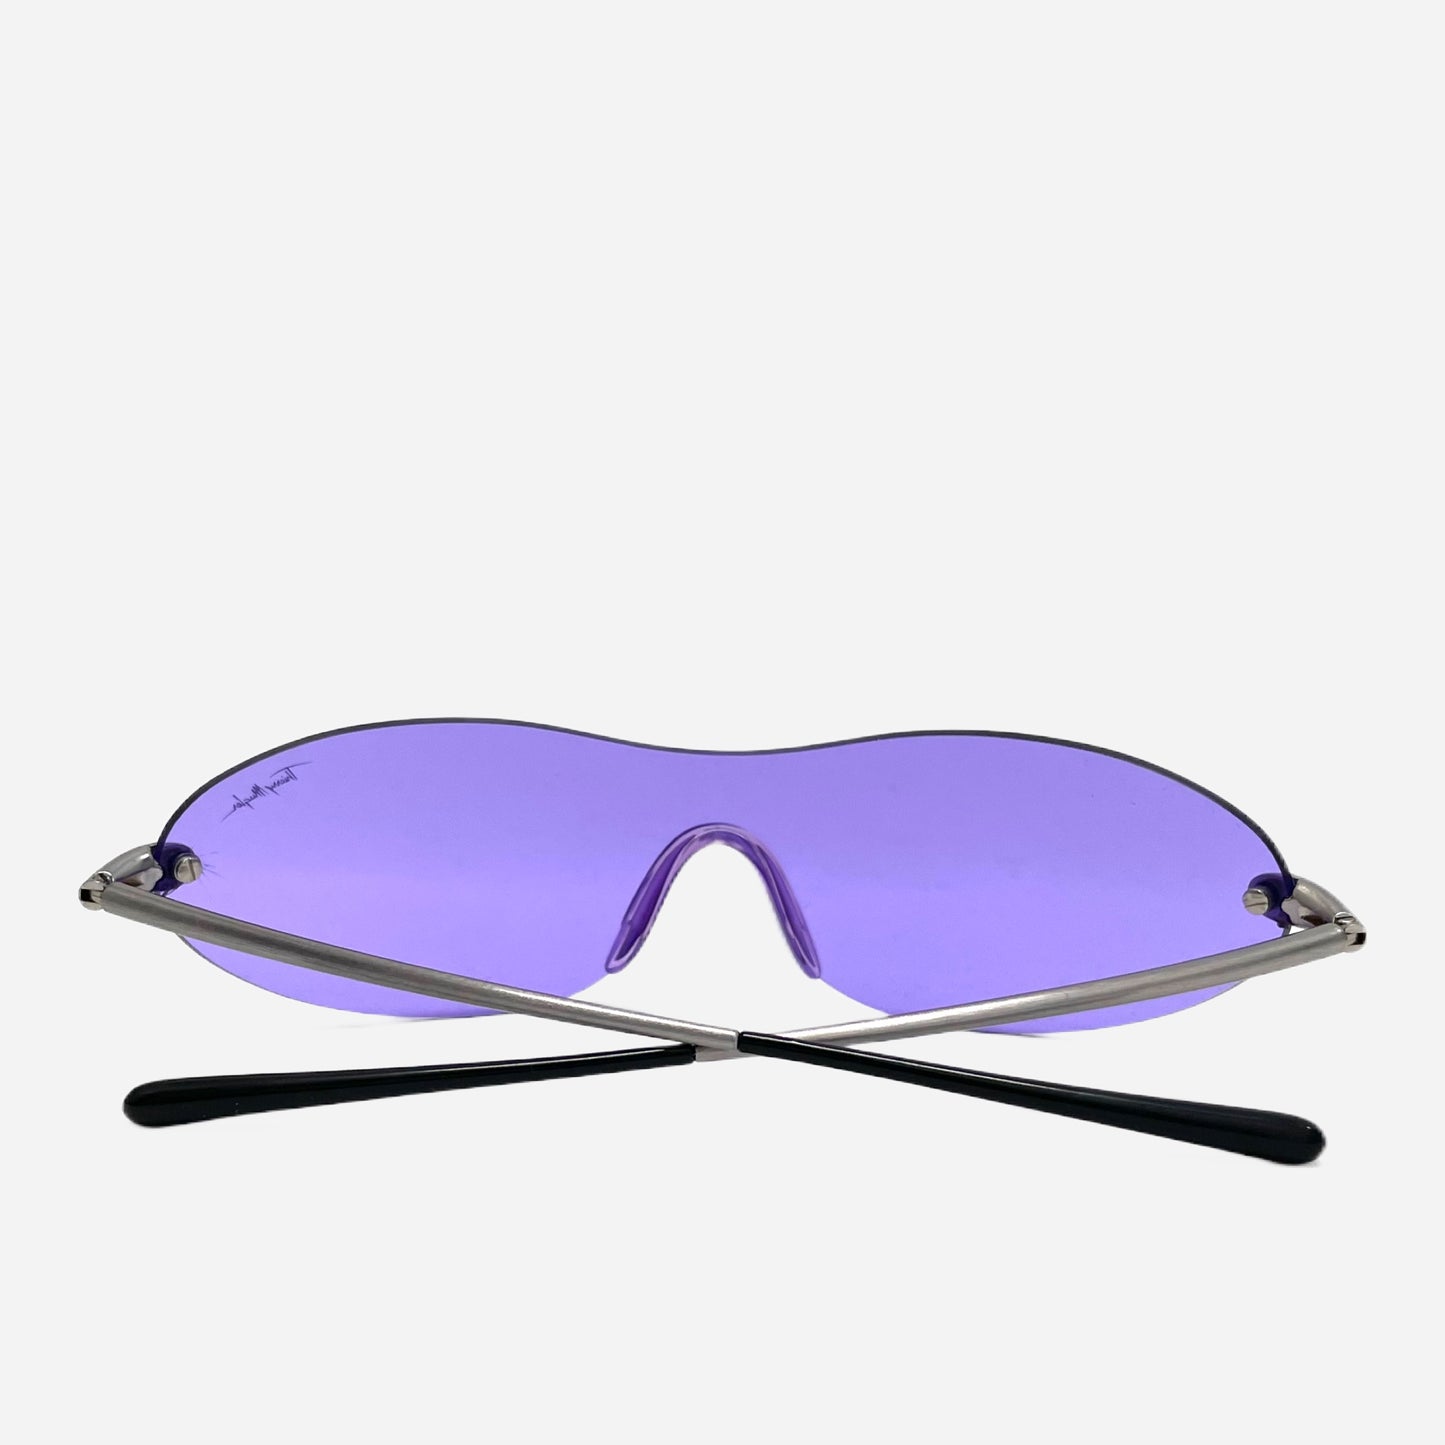 Vintage-Thierry-Mugler-Sonnenbrille-Sunglasses-schnelle-Brille-Modell-6532-the-seekers-back_9ea39796-0a3e-4bbc-93fc-4d954e812527